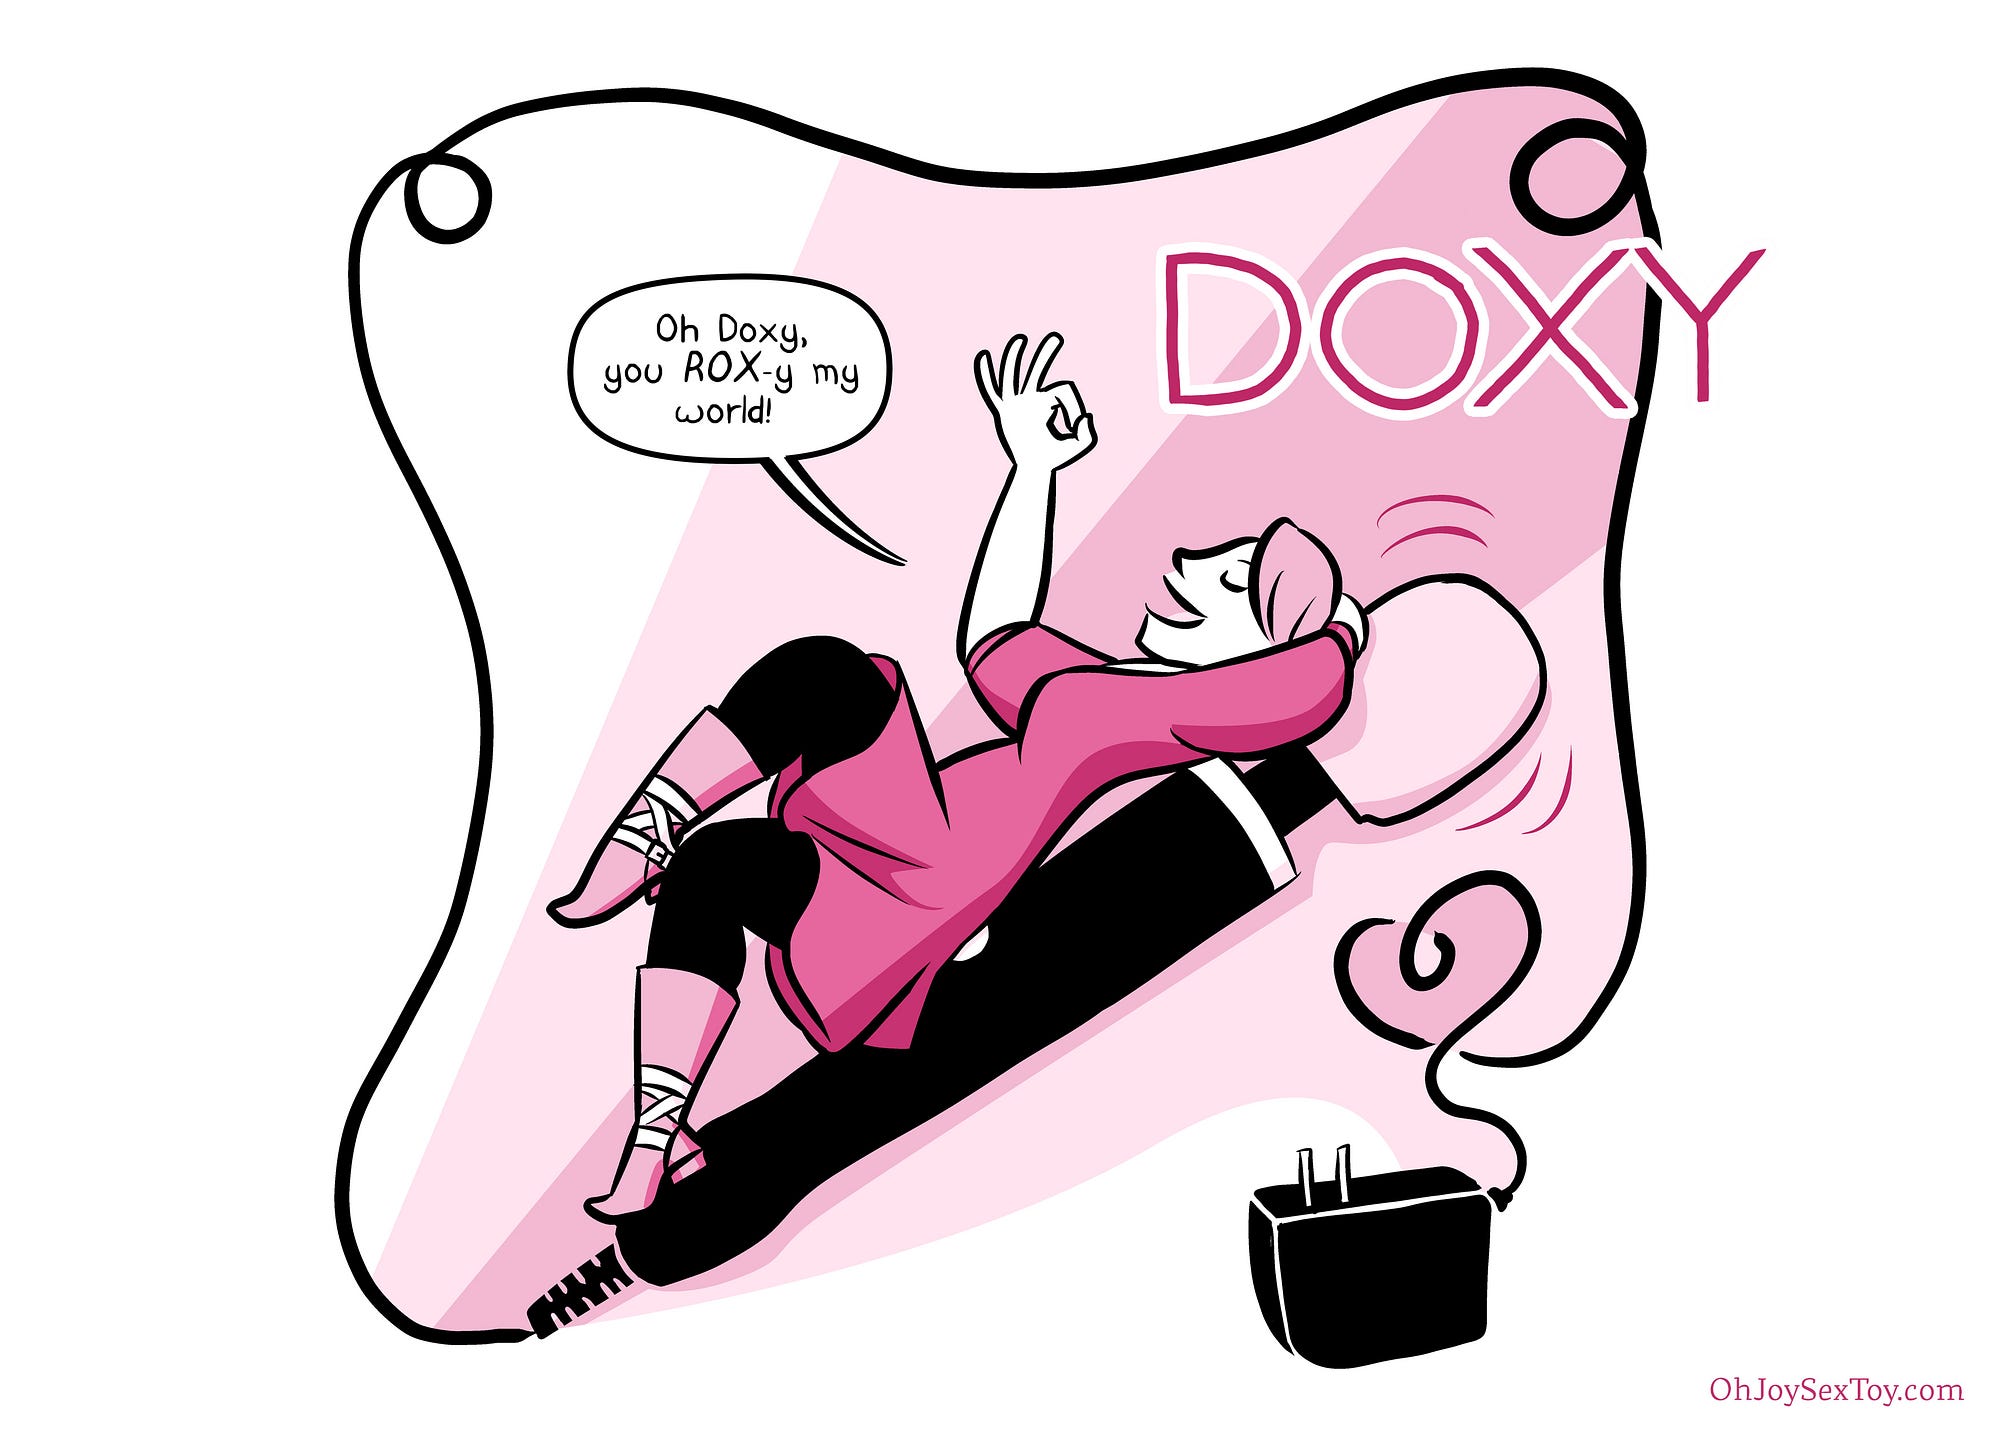 Doxy comic